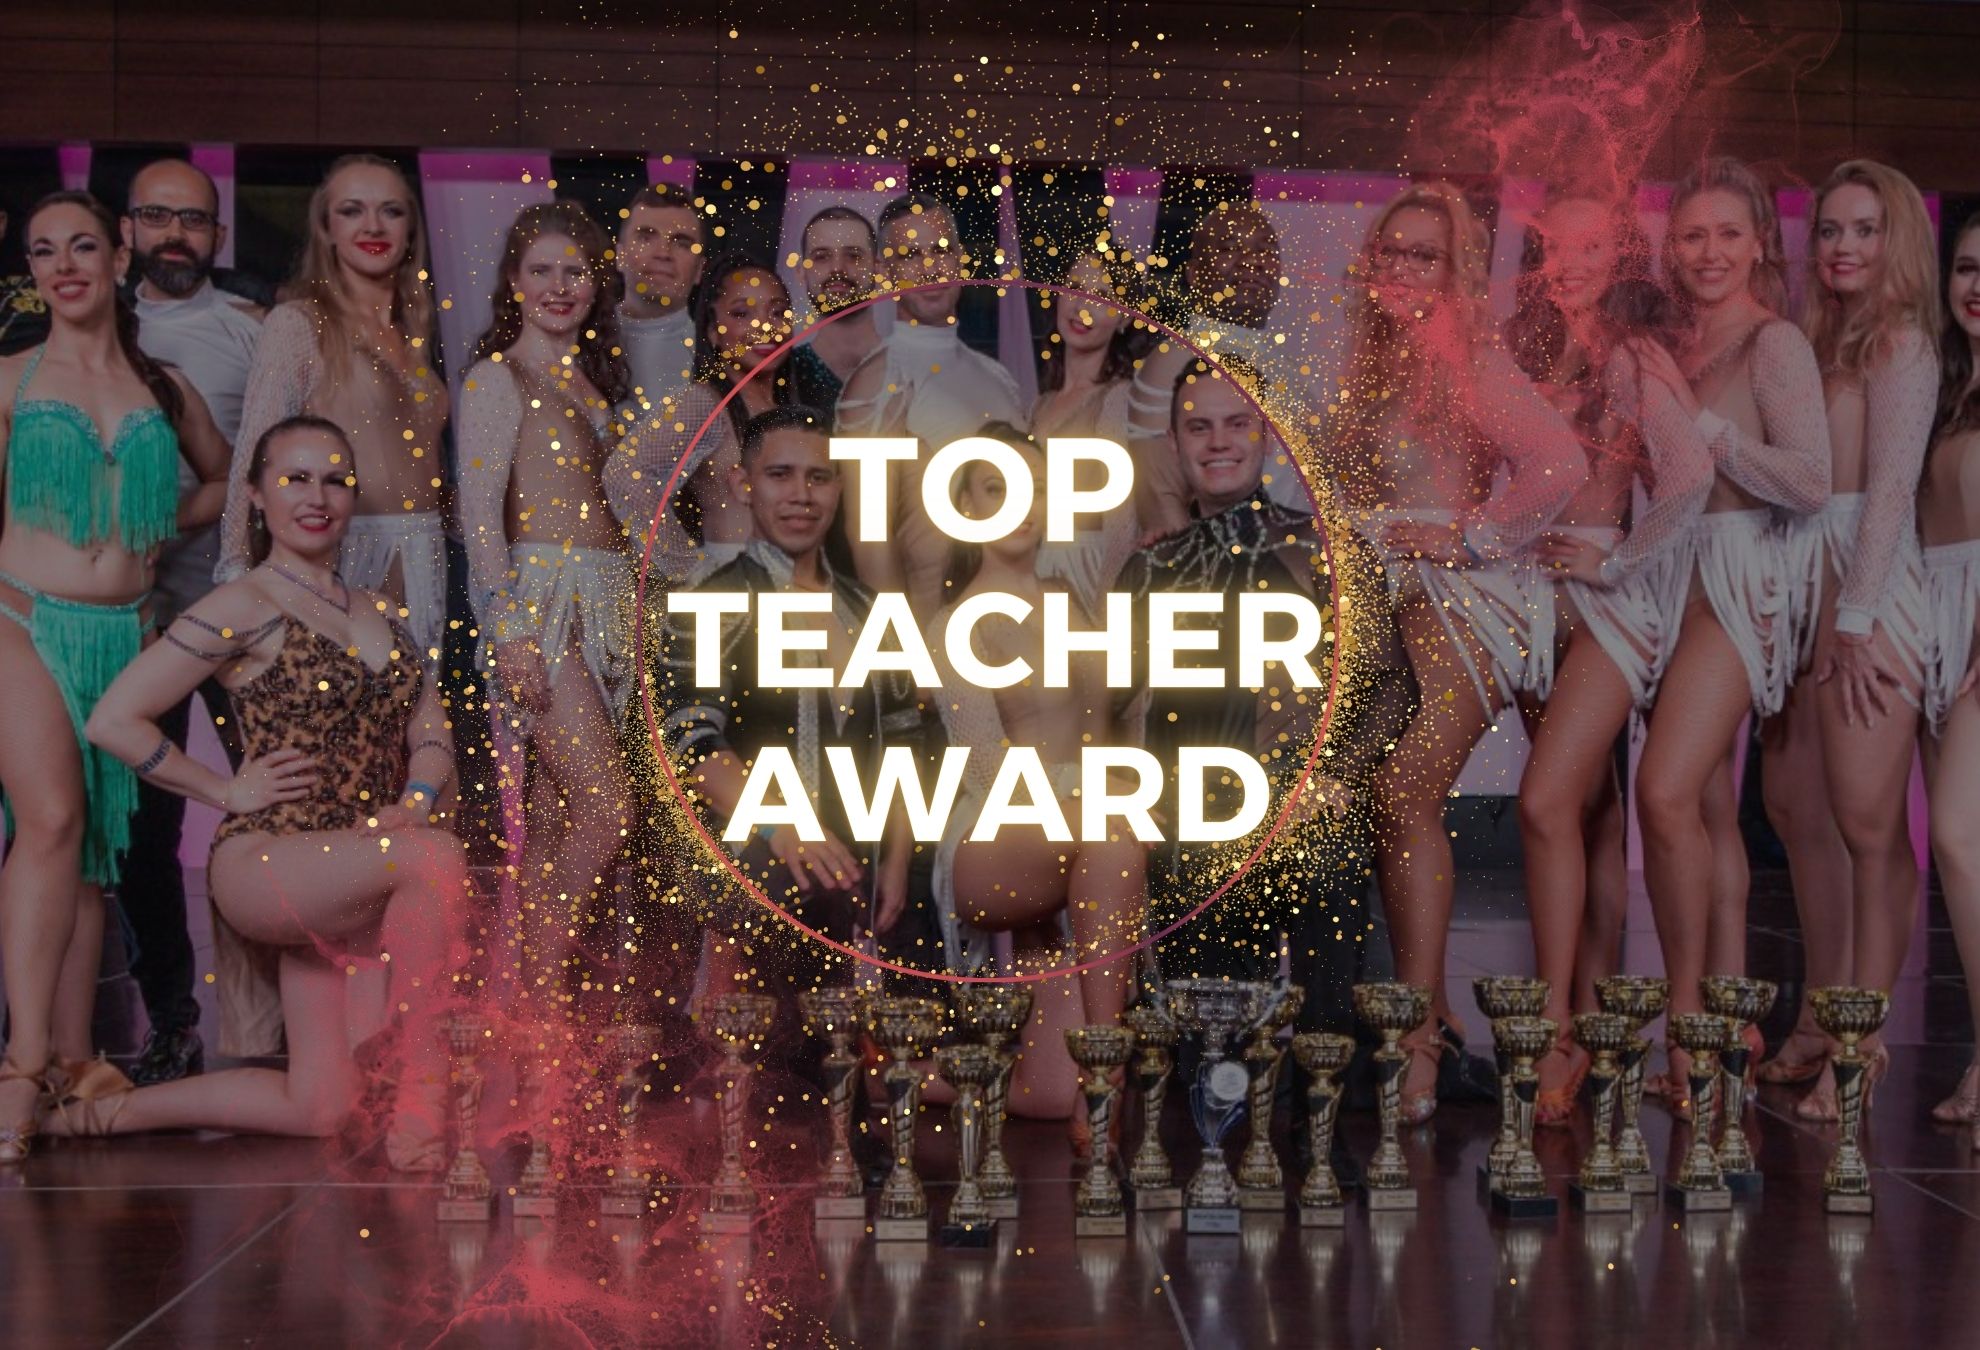 Top Teacher Award, Competition